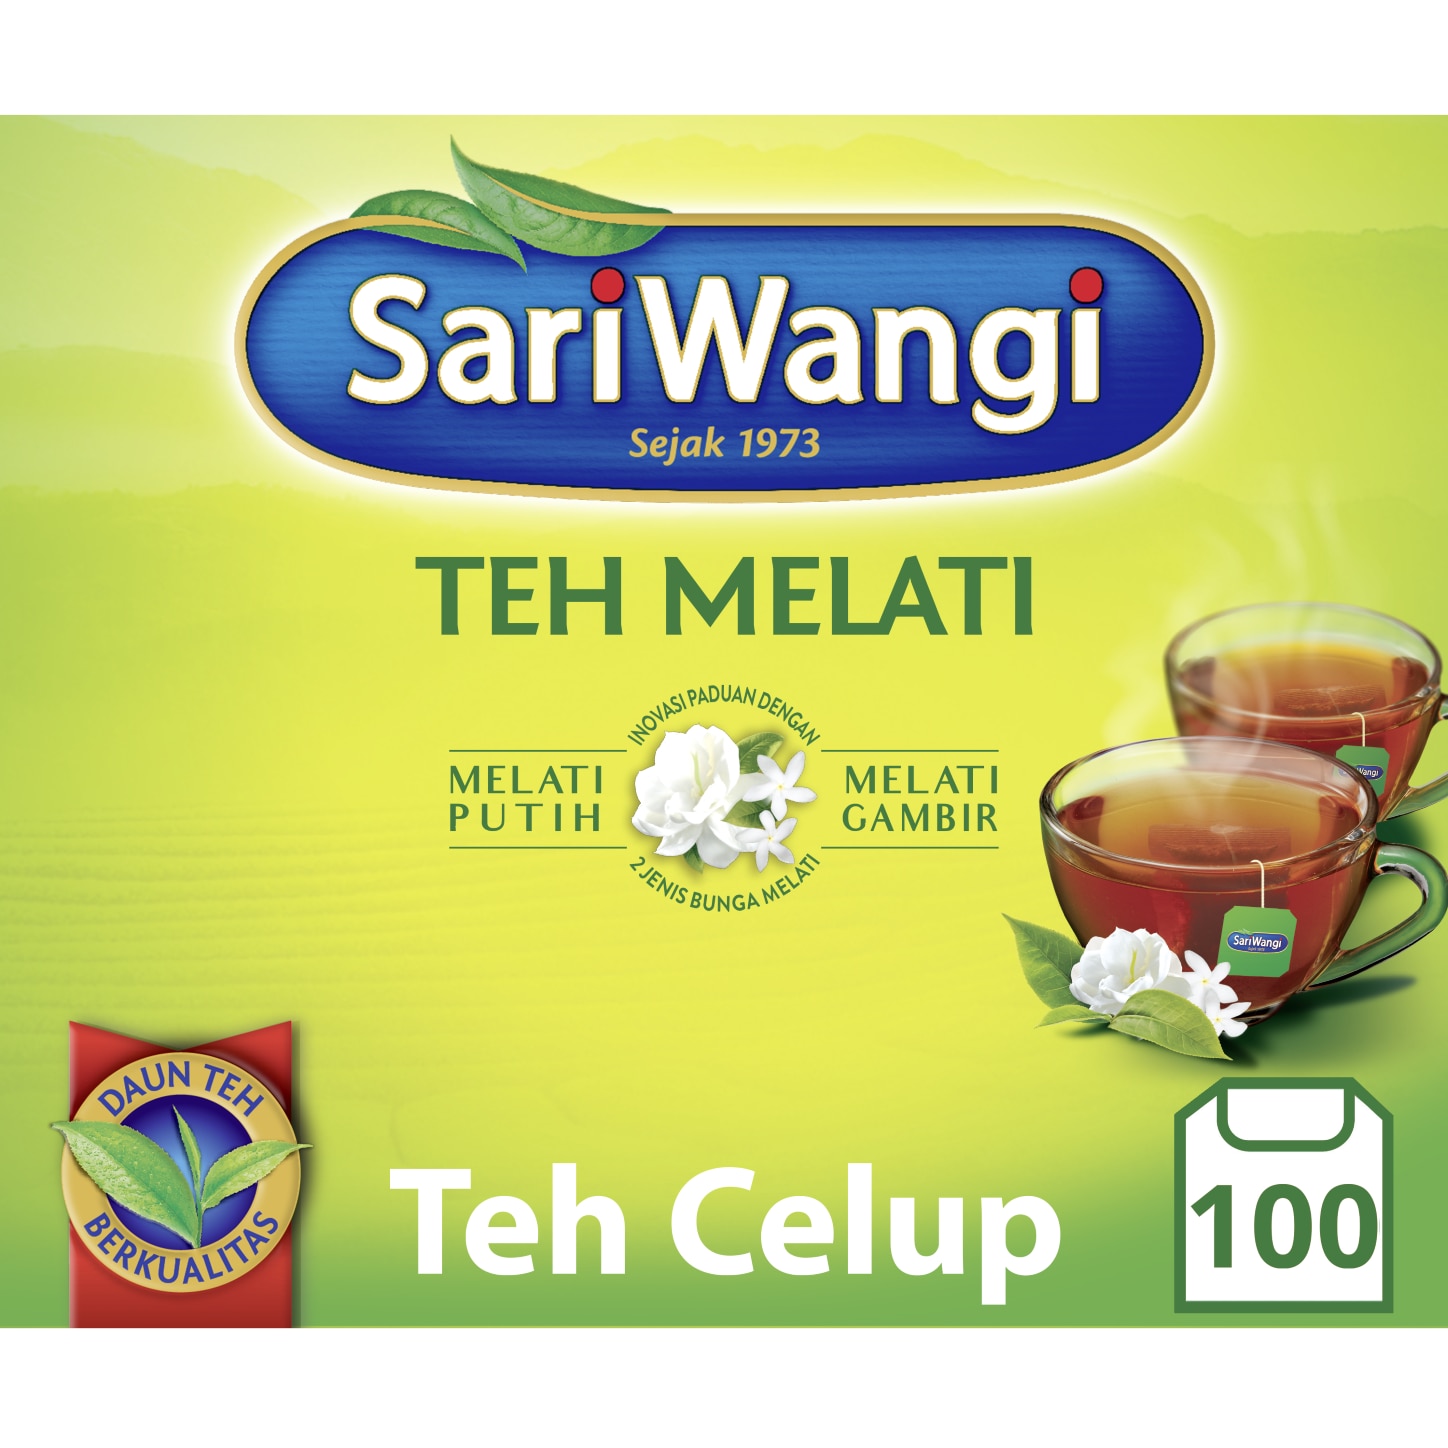 SariWangi Teh Melati Tea Bag 100 - High quality jasmine tea in economical pack for a better margin